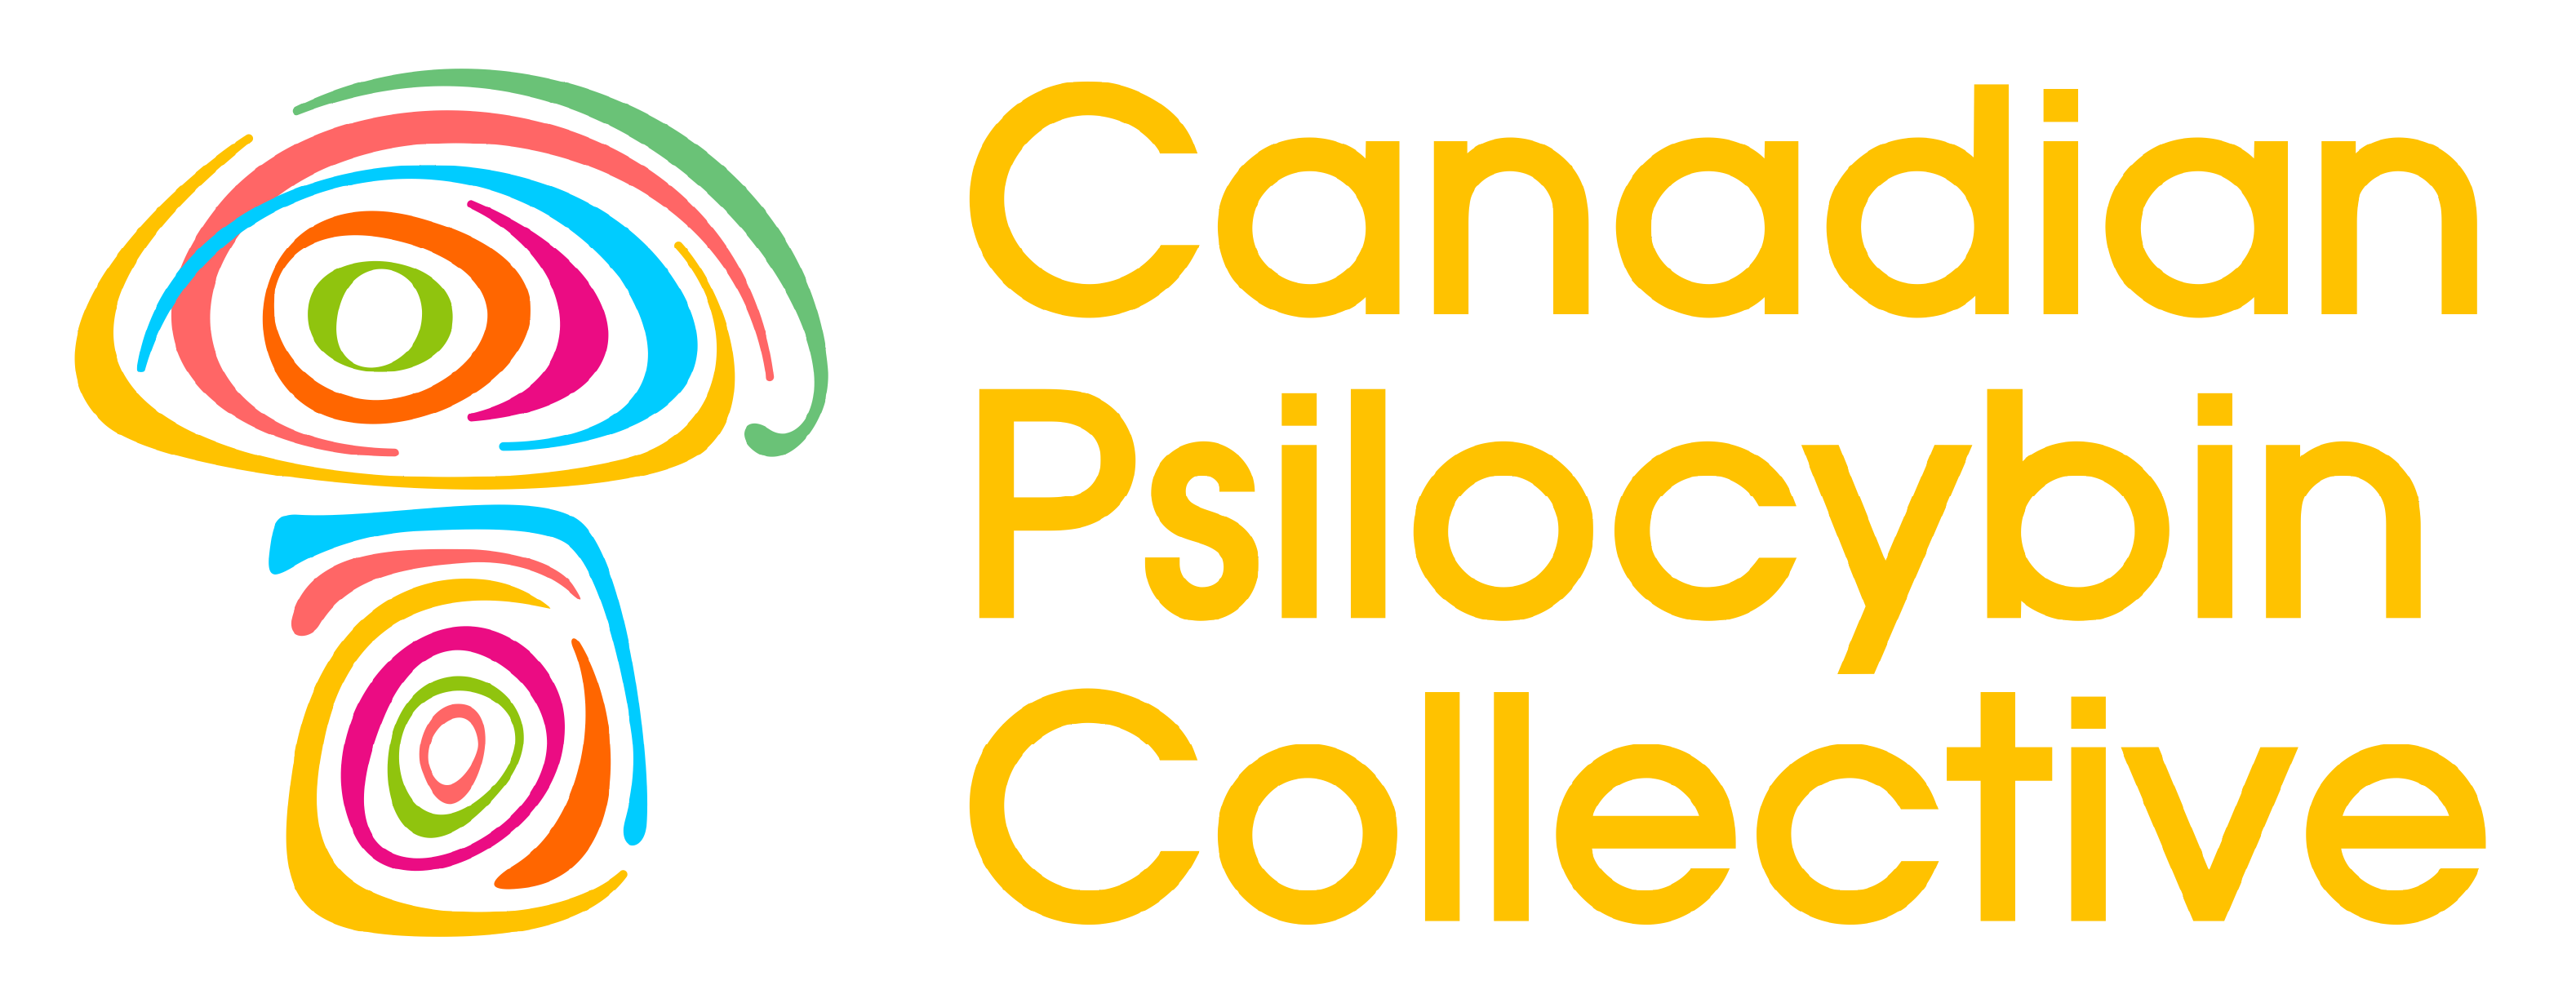 Canadian Psilocybin Collective